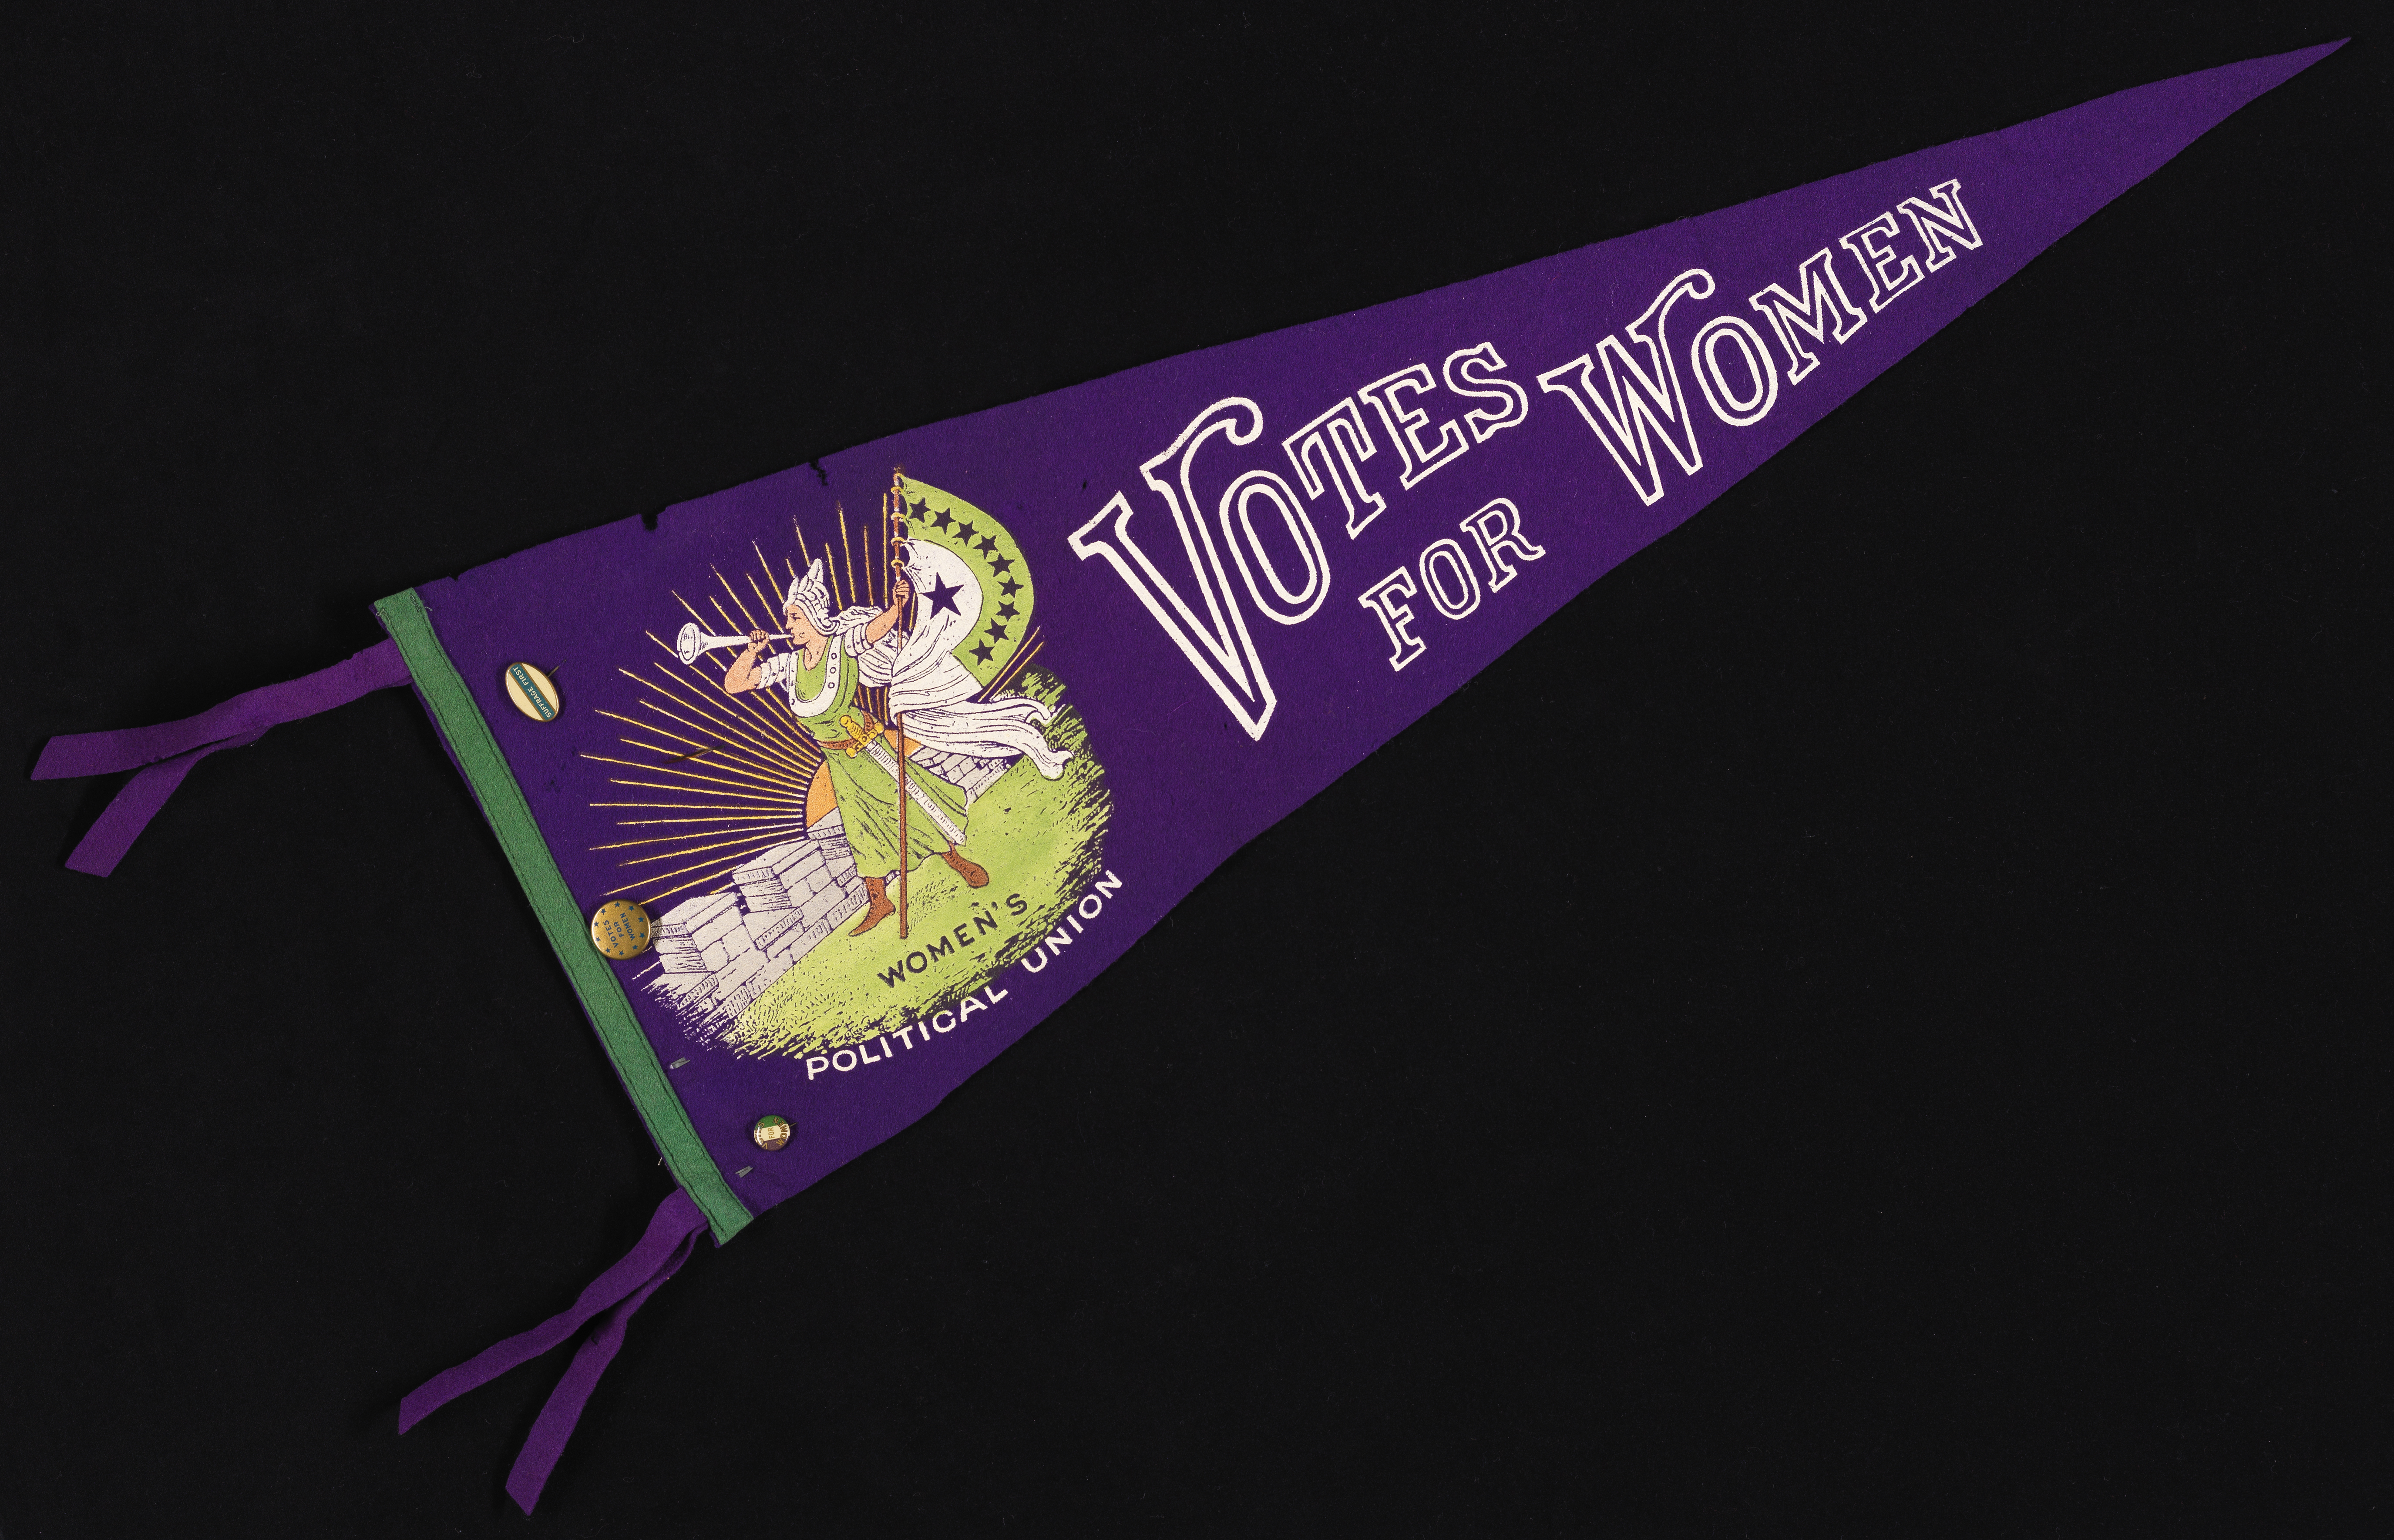 「Votes For Women」が白い文字で書かれた紫色のペンダントと、トランペットを吹くバイキングeqsue女性の絵